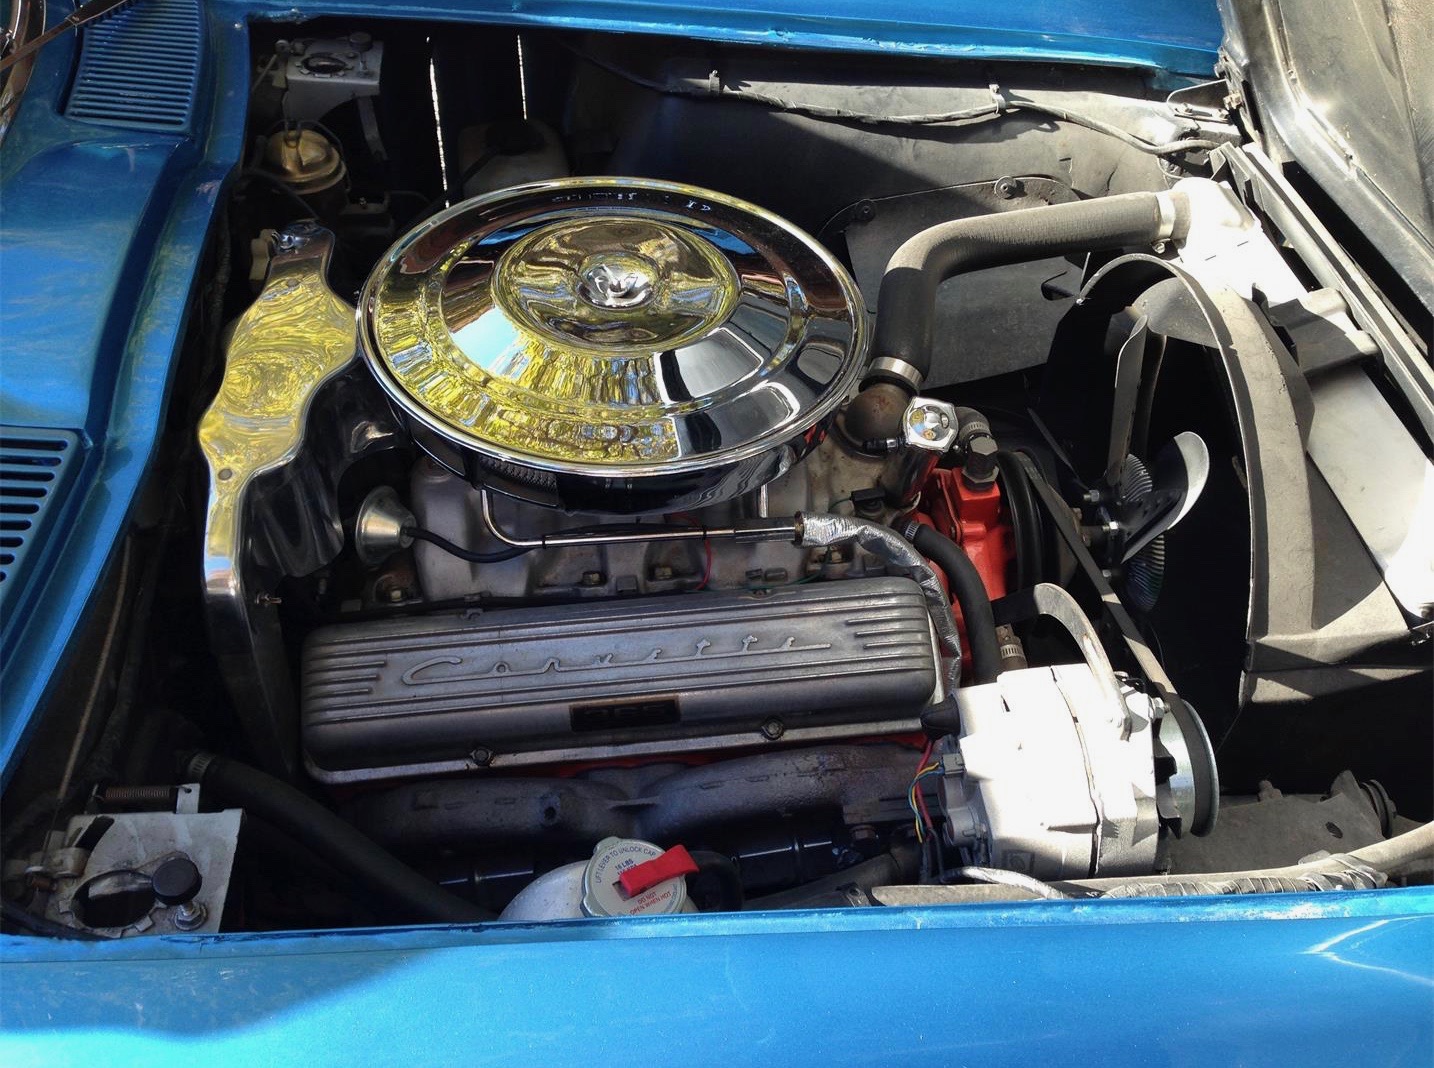 1965 Corvette, Patriotically blue ’65 Corvette convertible, ClassicCars.com Journal